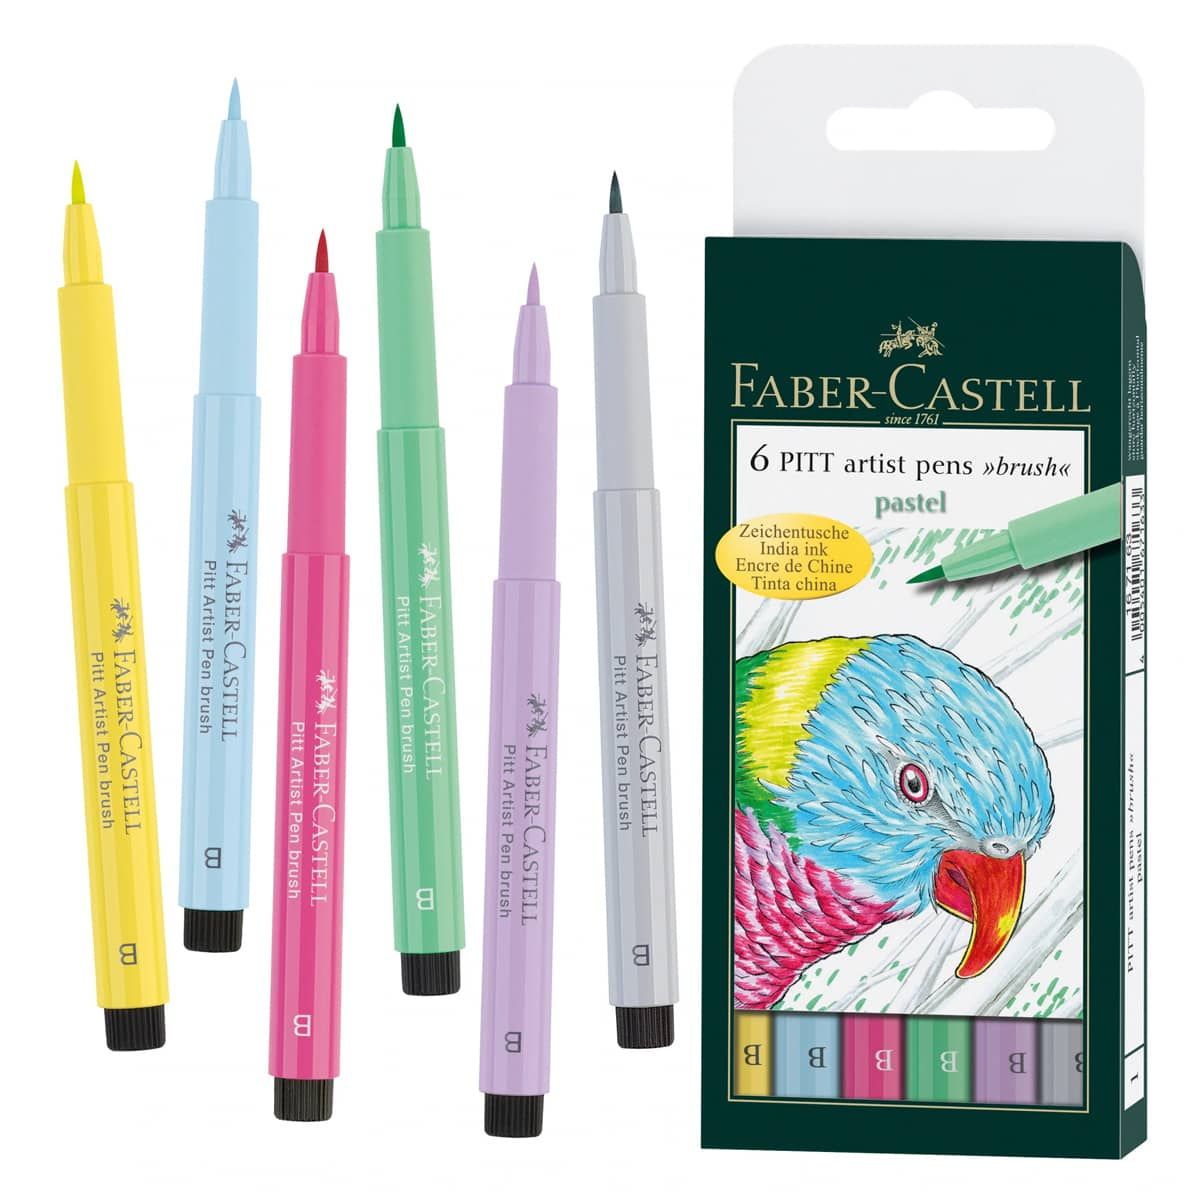 https://www.jerrysartarama.com/media/catalog/product/cache/ecb49a32eeb5603594b082bd5fe65733/p/a/pastel-colors-set-6-brush-pens-pitt-faber-castell-ls-v17694.jpg